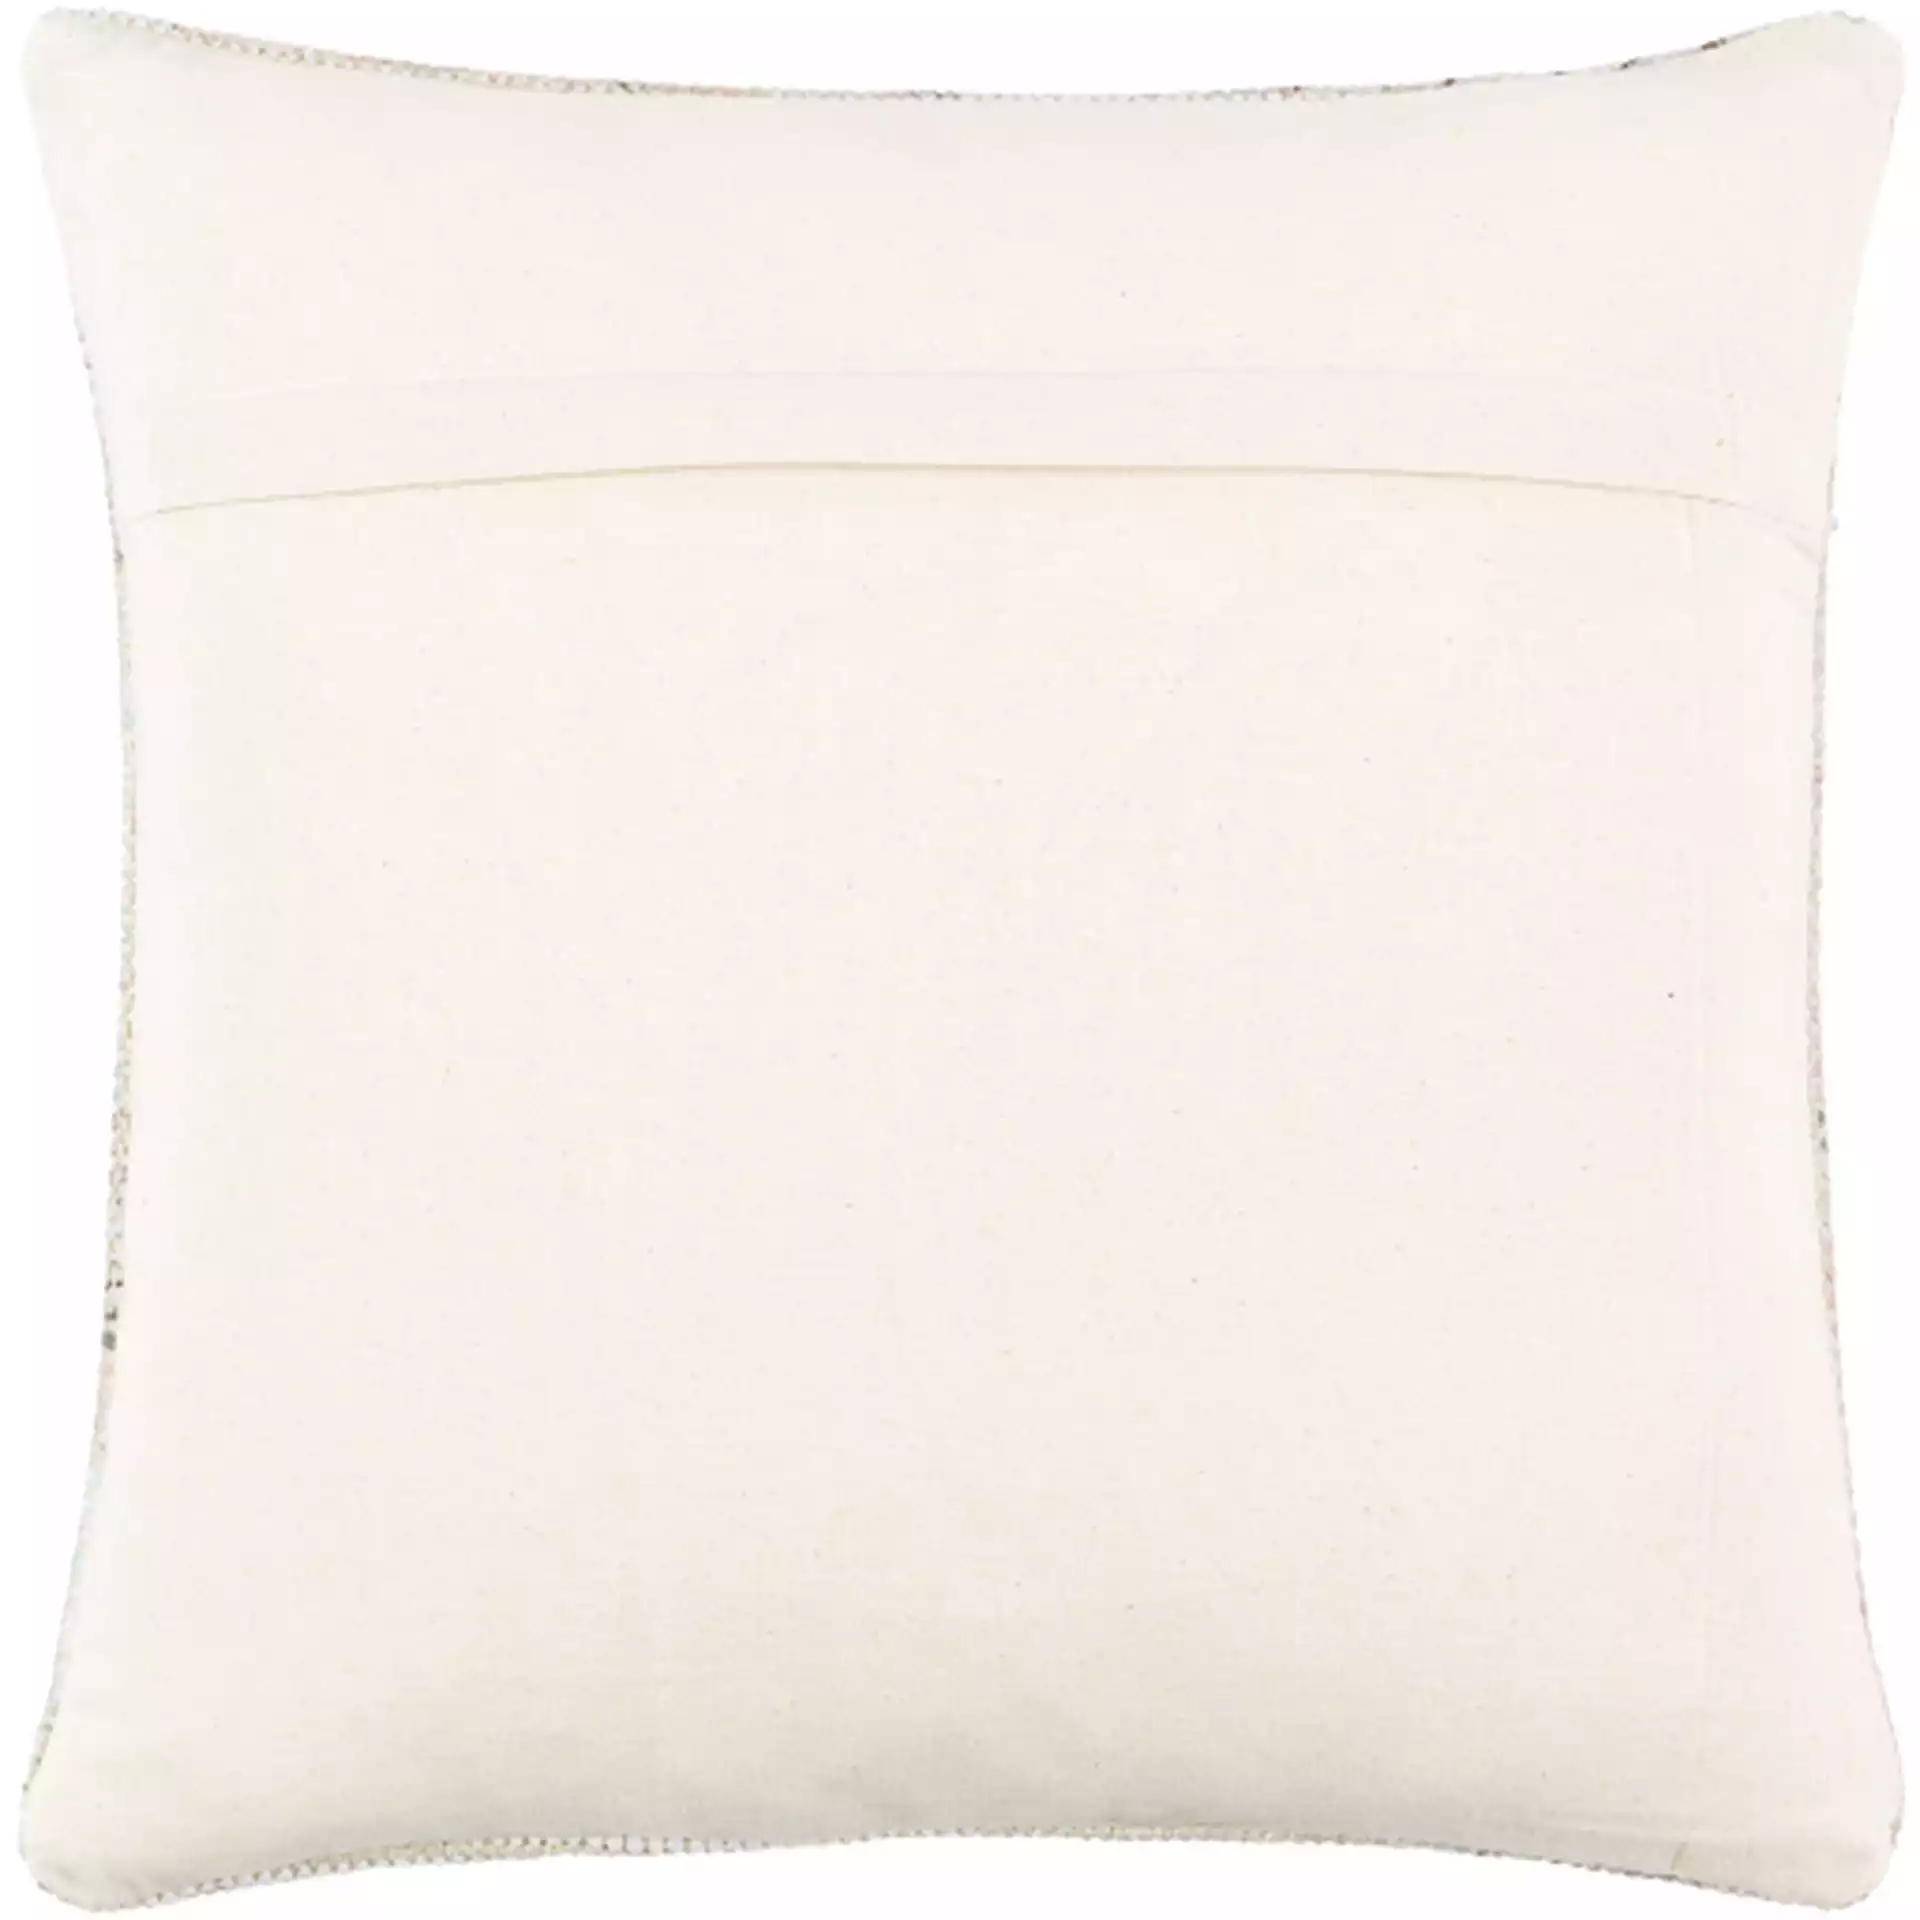 Samsun Pillow, 18" x 18", Blush